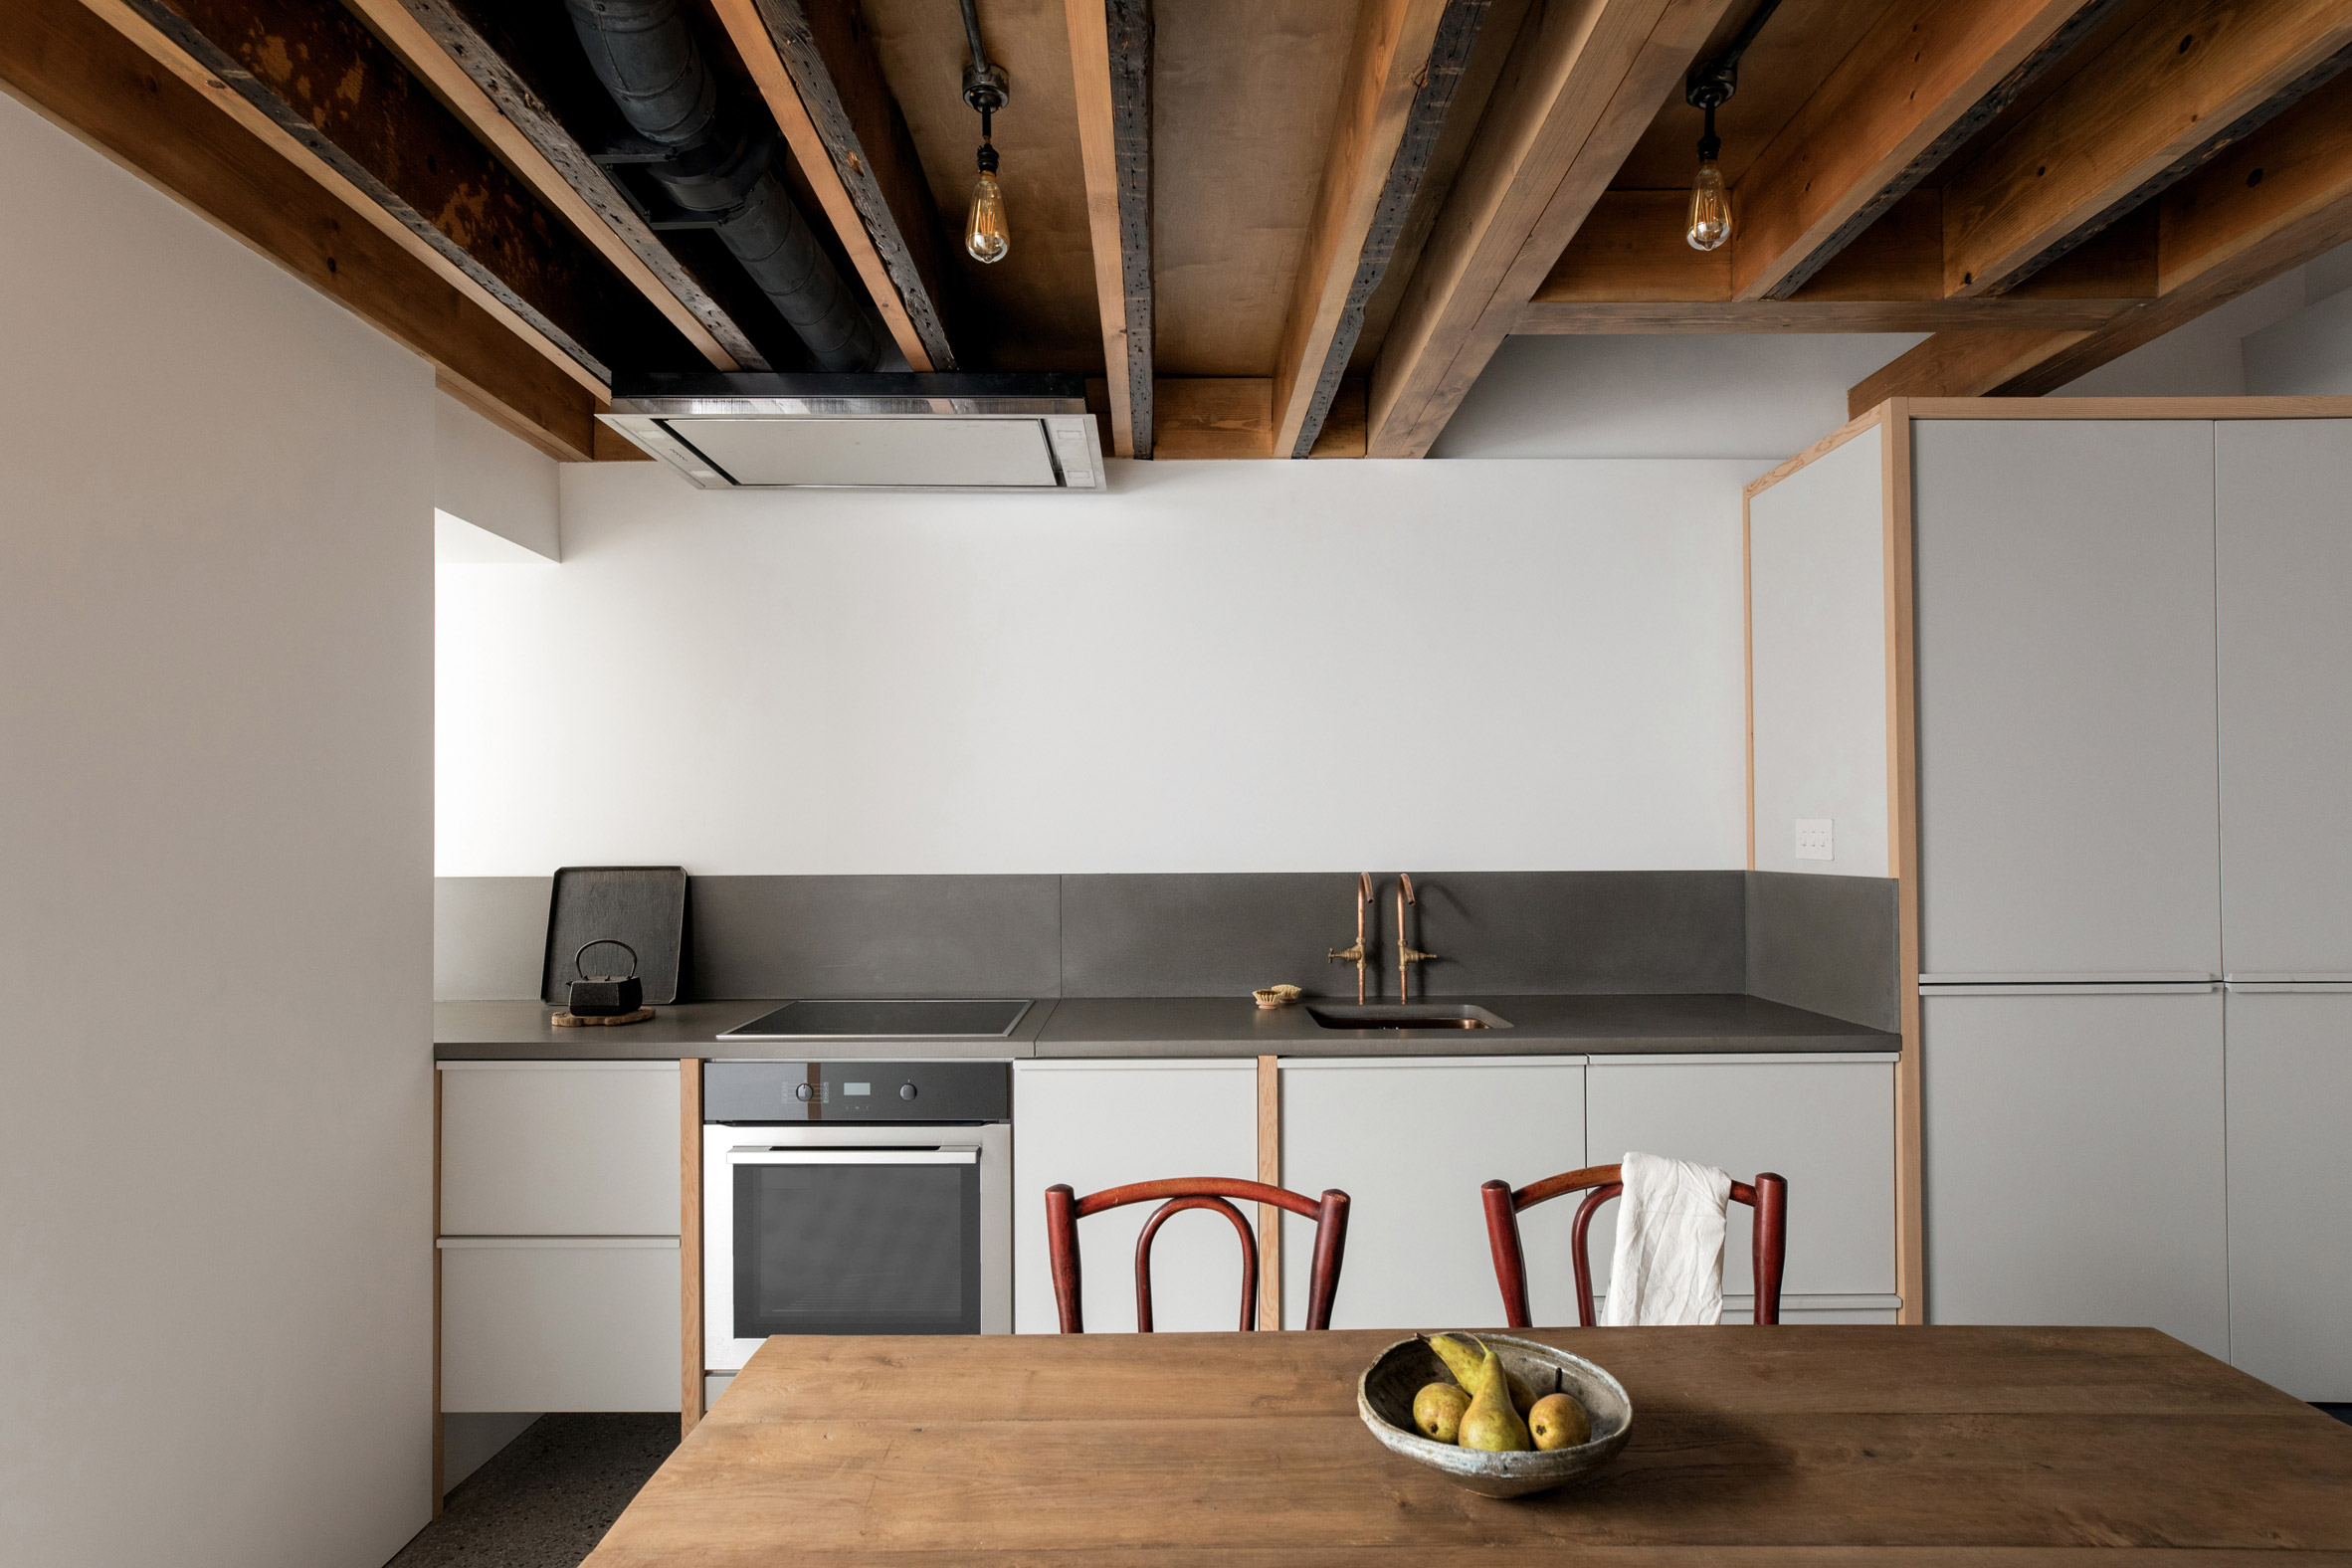 Kitchen interior at London home renovation by Tuckey Design Studio